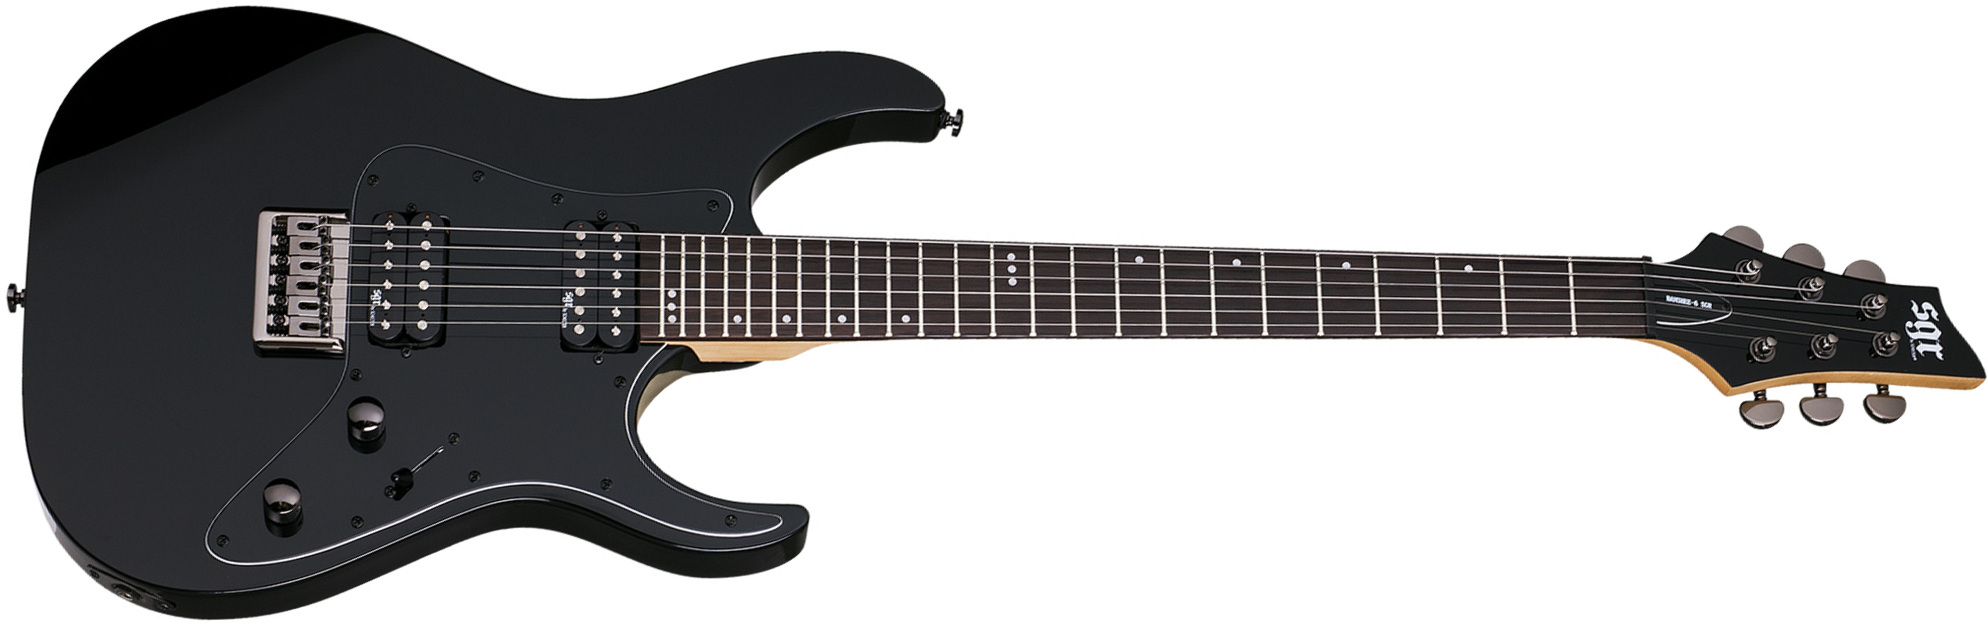 Schecter Banshee 6 Sgr 2h Ht Rw - Gloss Black - Str shape electric guitar - Main picture